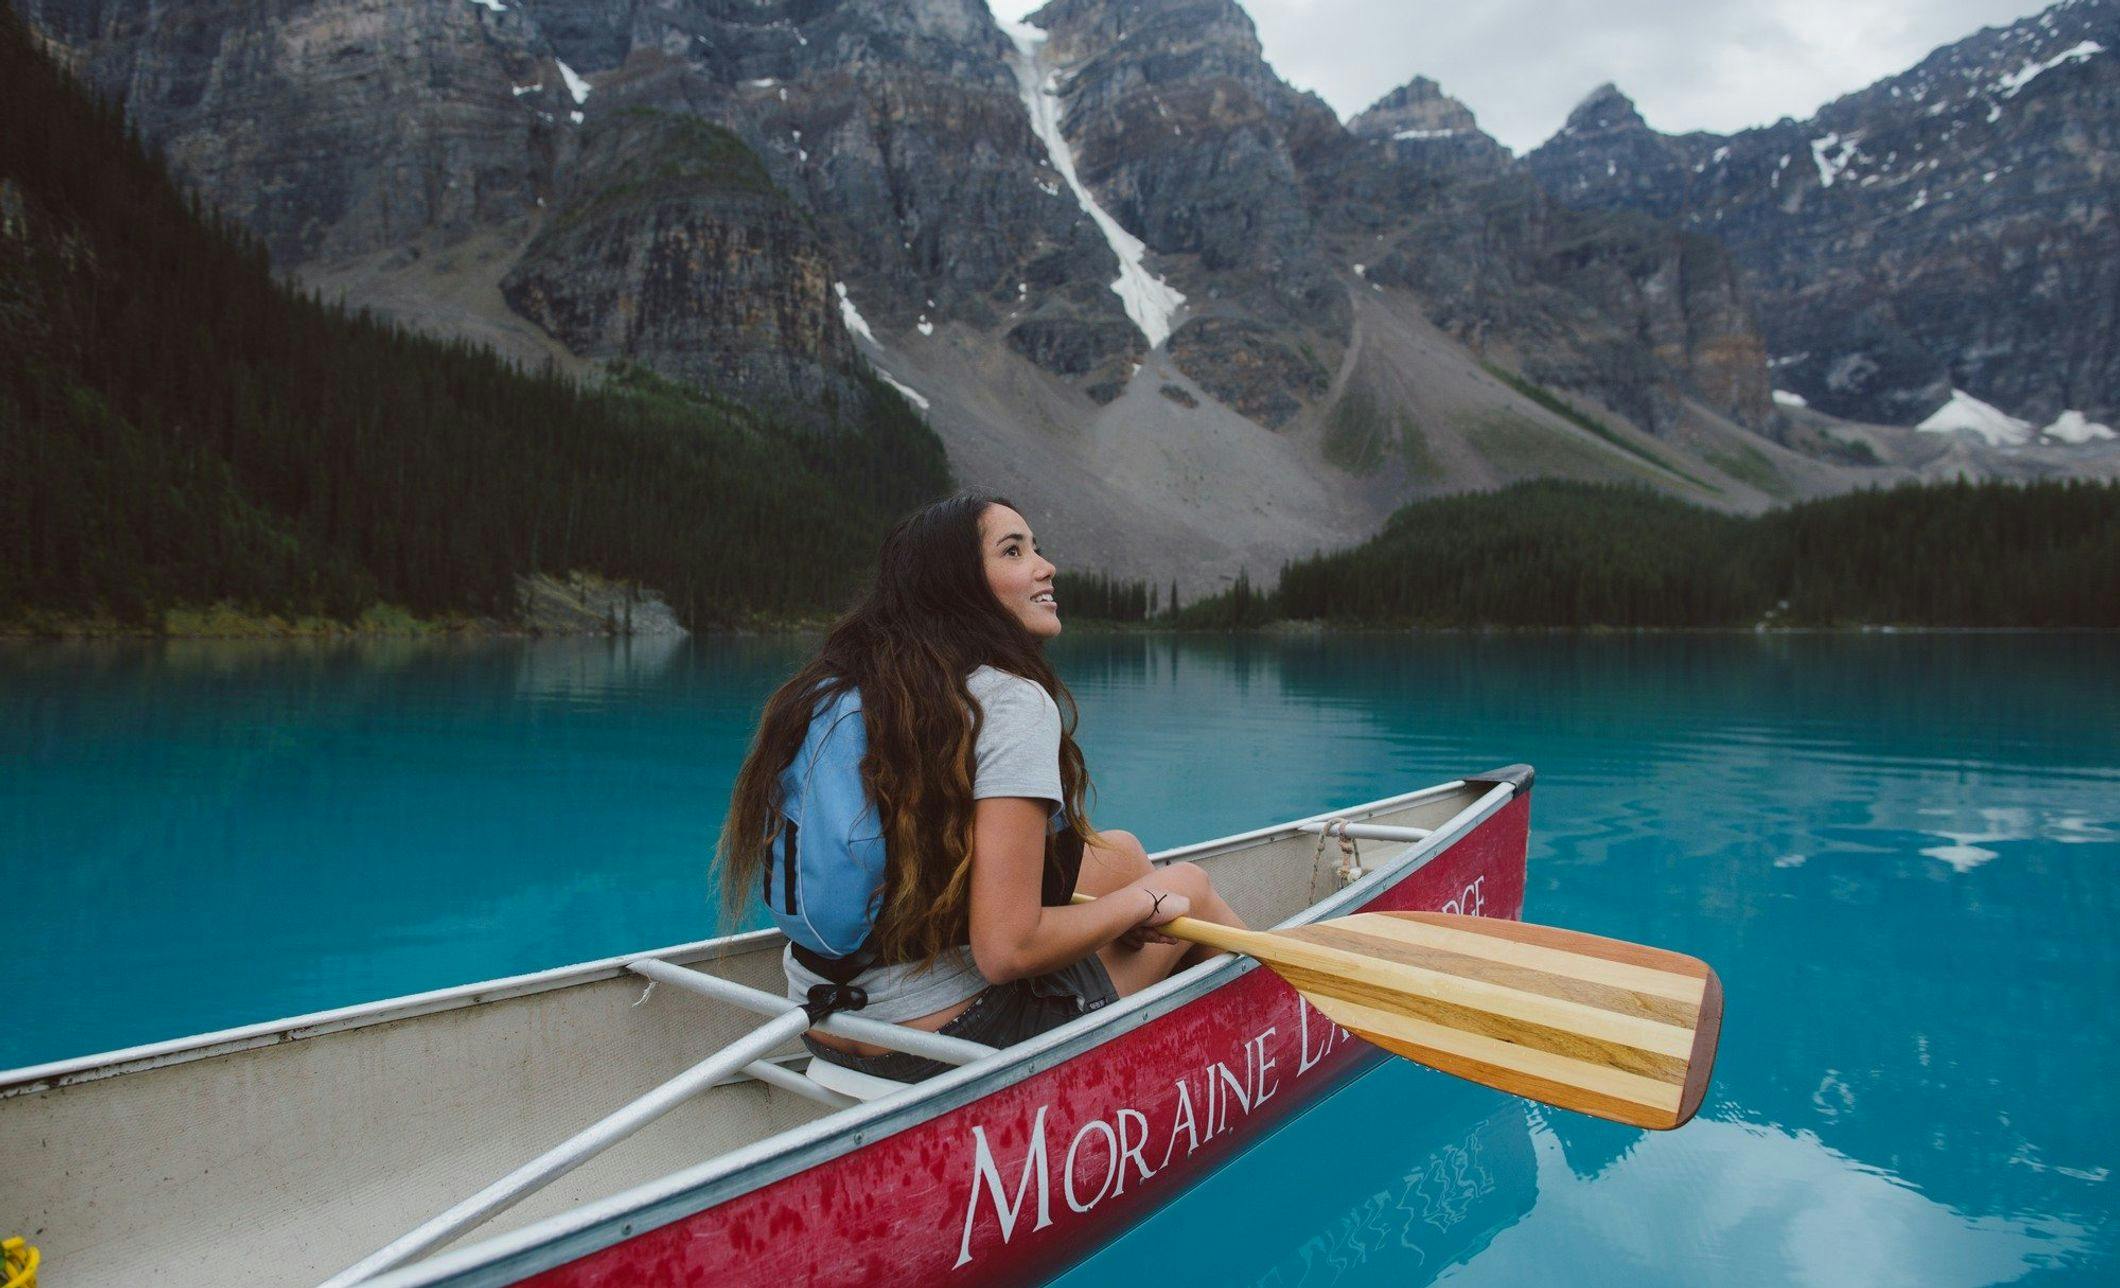 Canoeing on Moraine Lake, Banff National Park